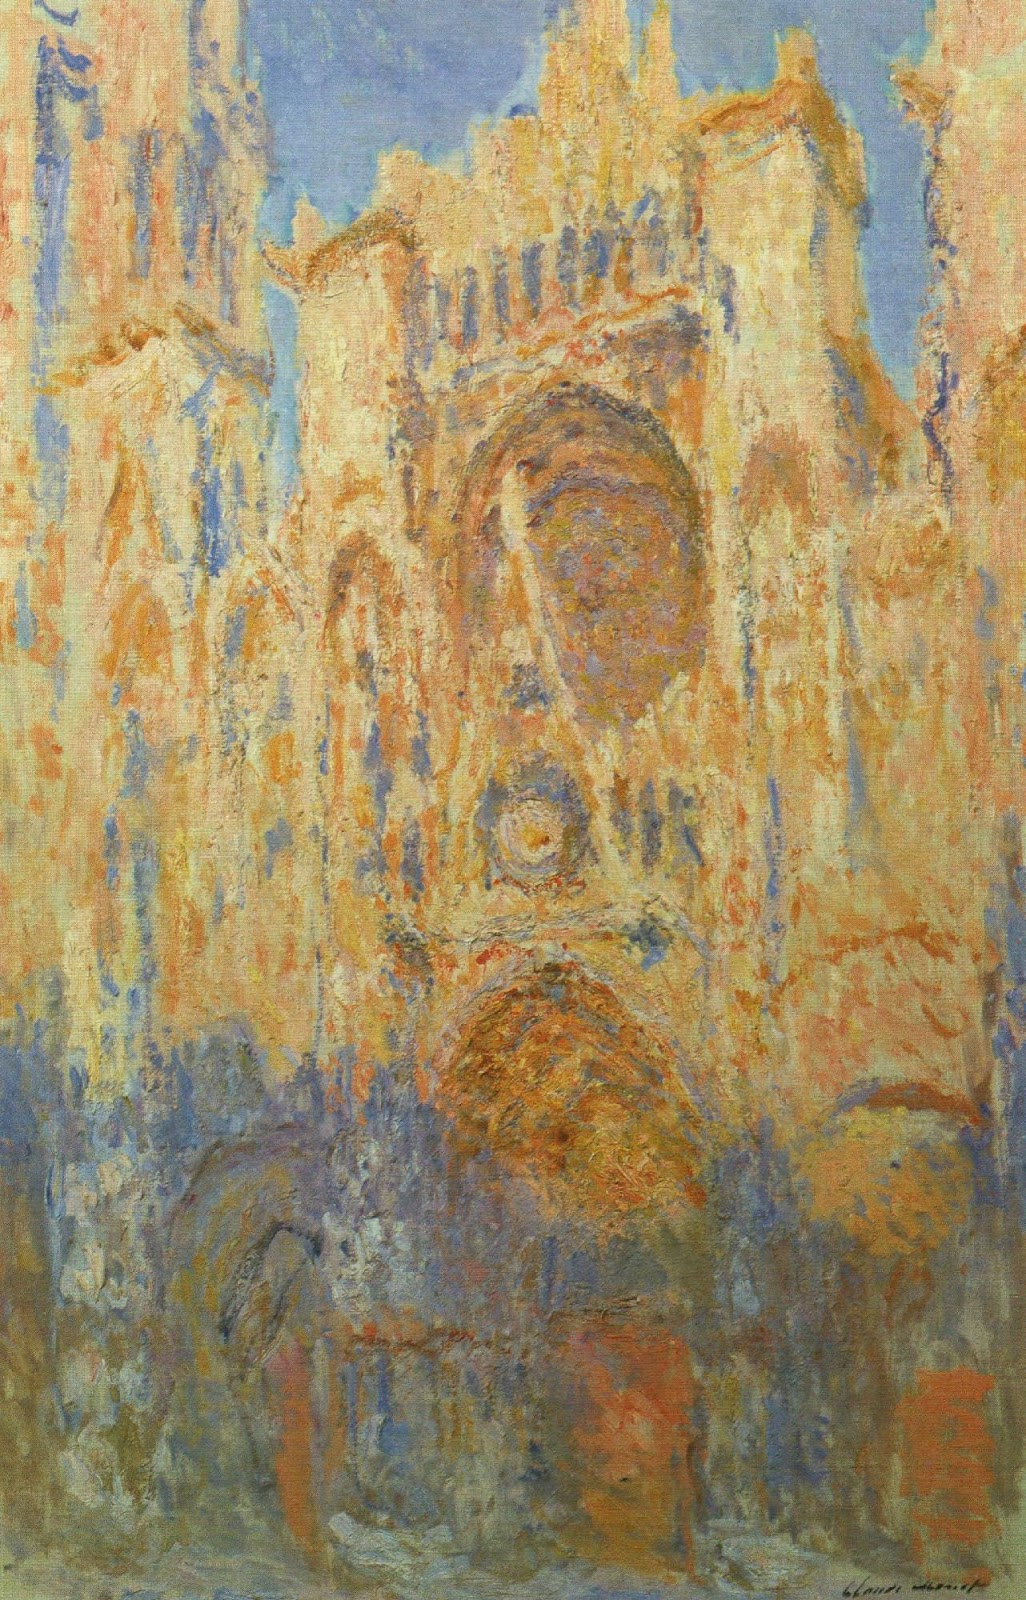 Claude+Monet-1840-1926 (637).jpg